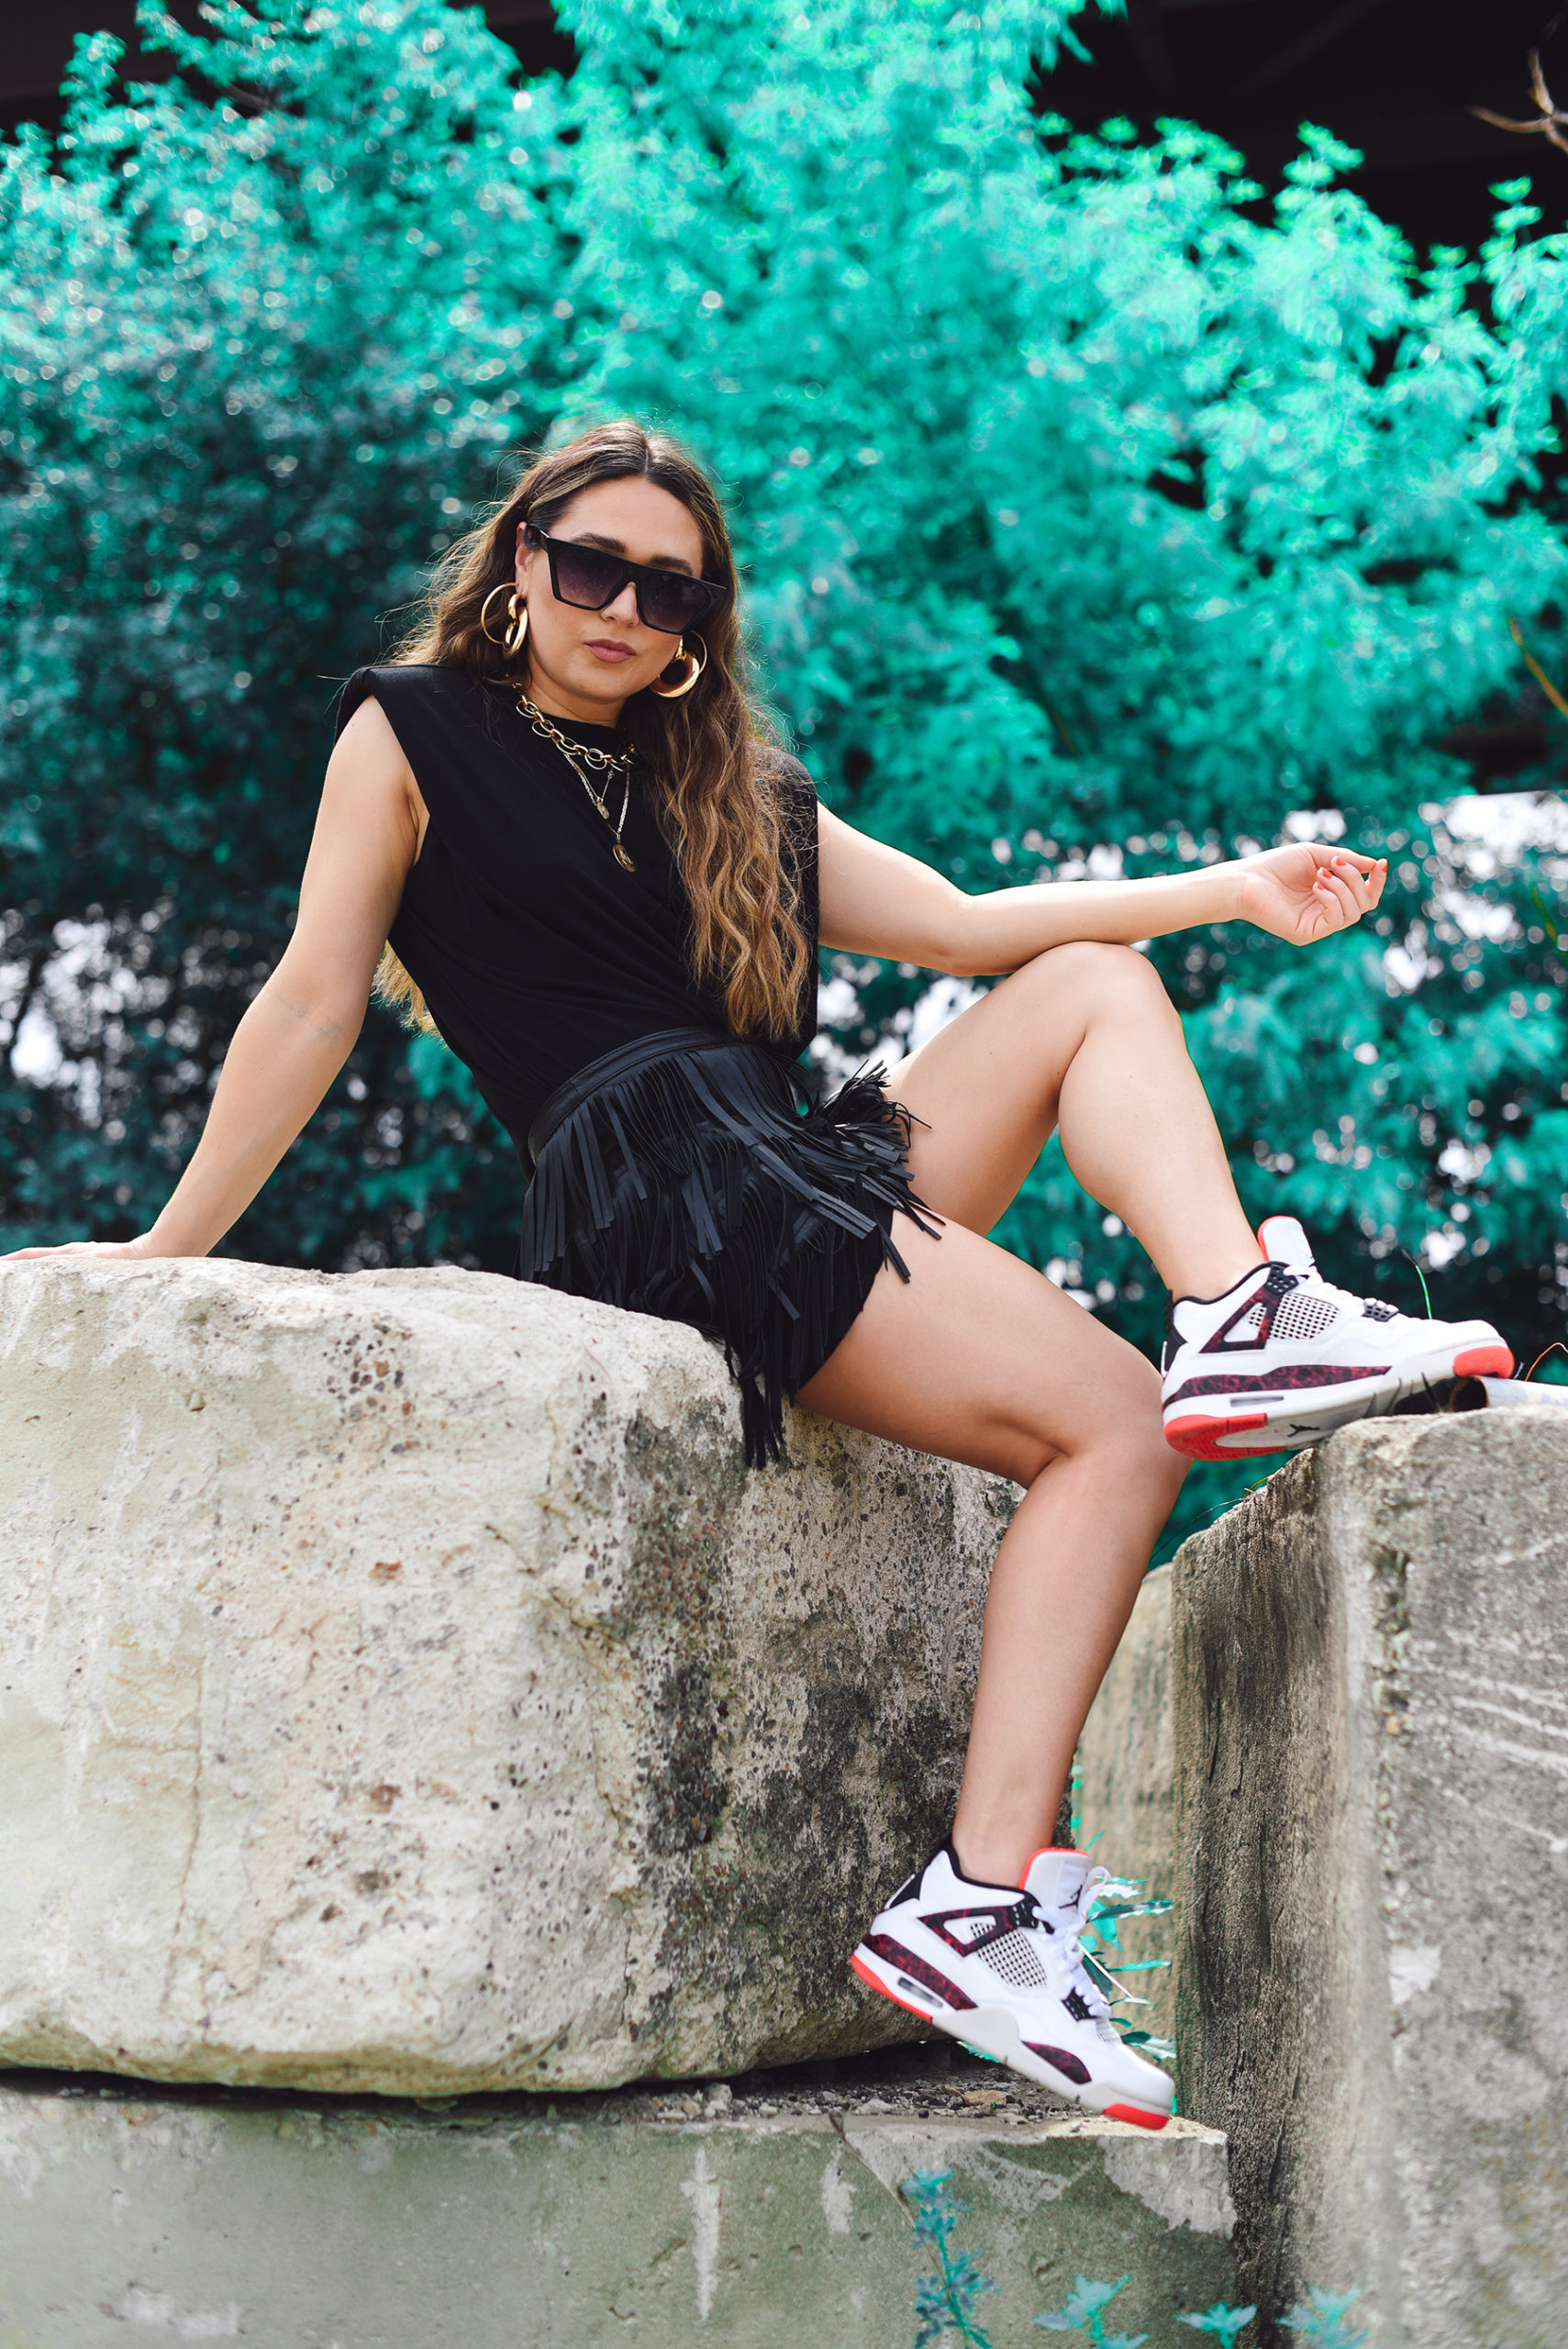 air-jordan-nike-high-fashion-street-style-girl-blogger-outfit-inspo